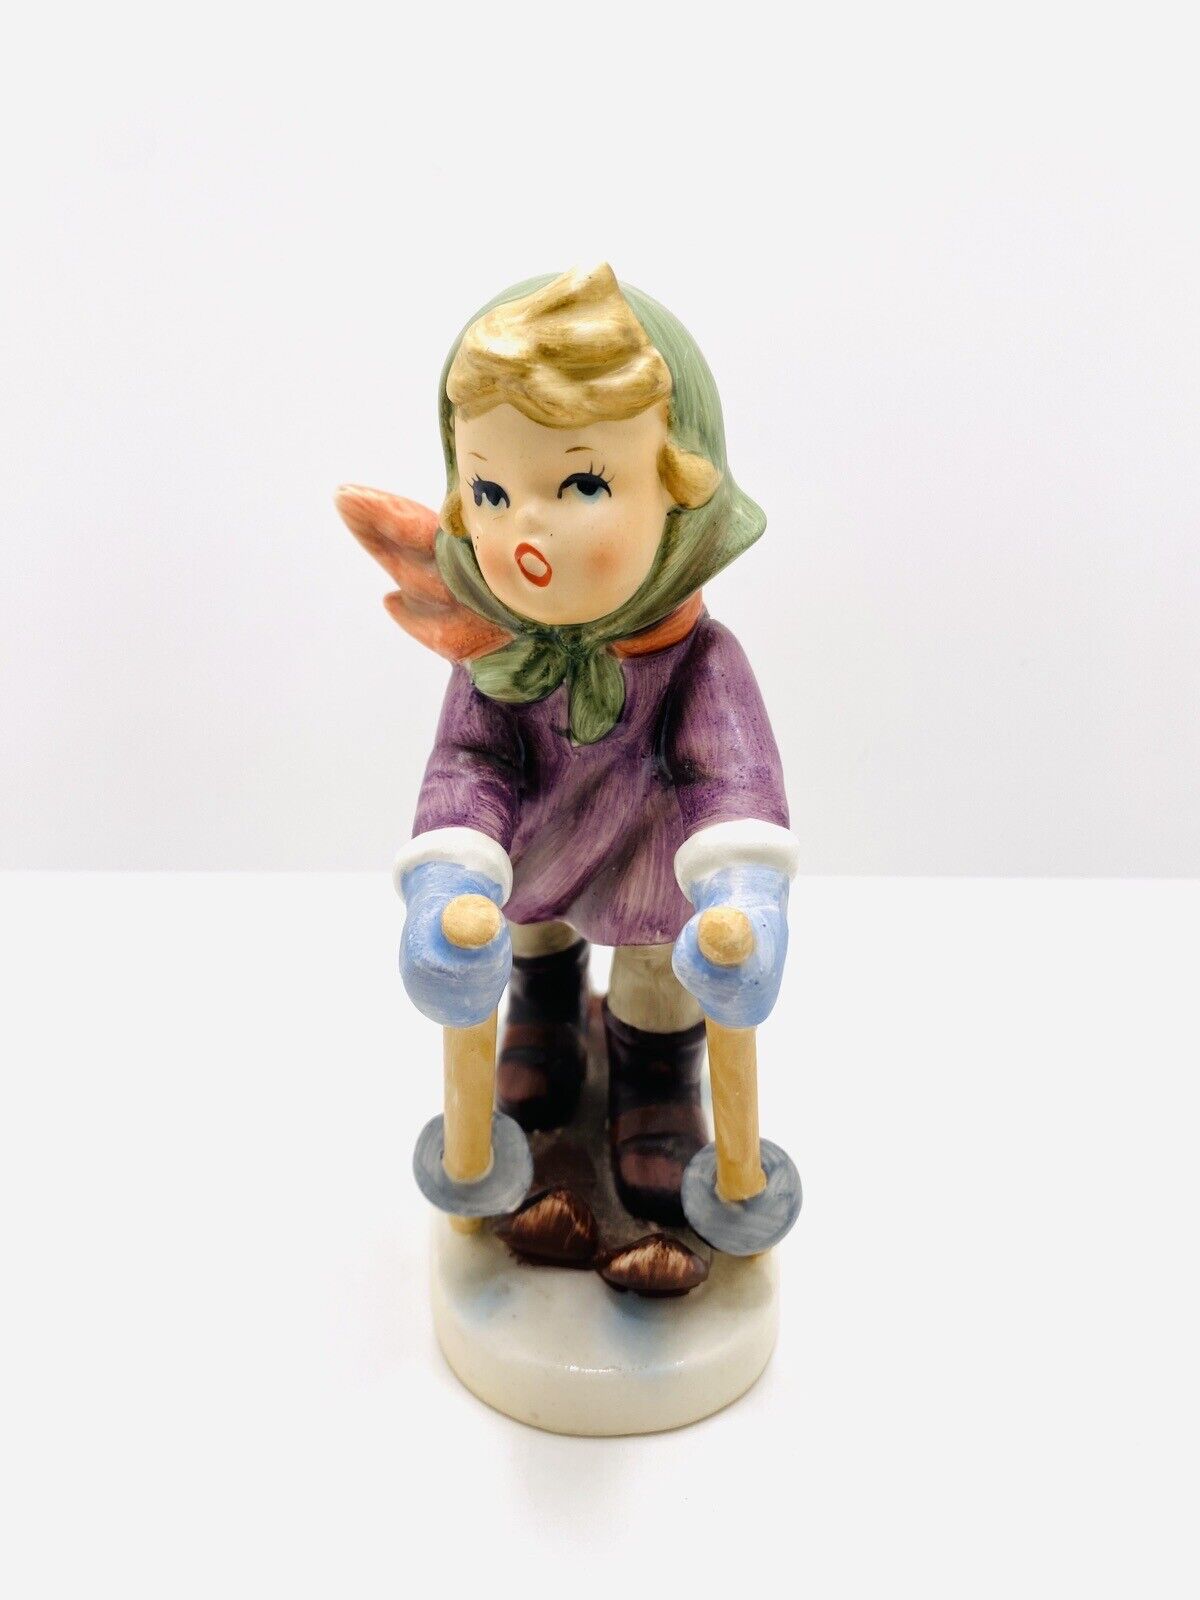 Vintage Napcoware Figurine Girl With Skis Import Japan 